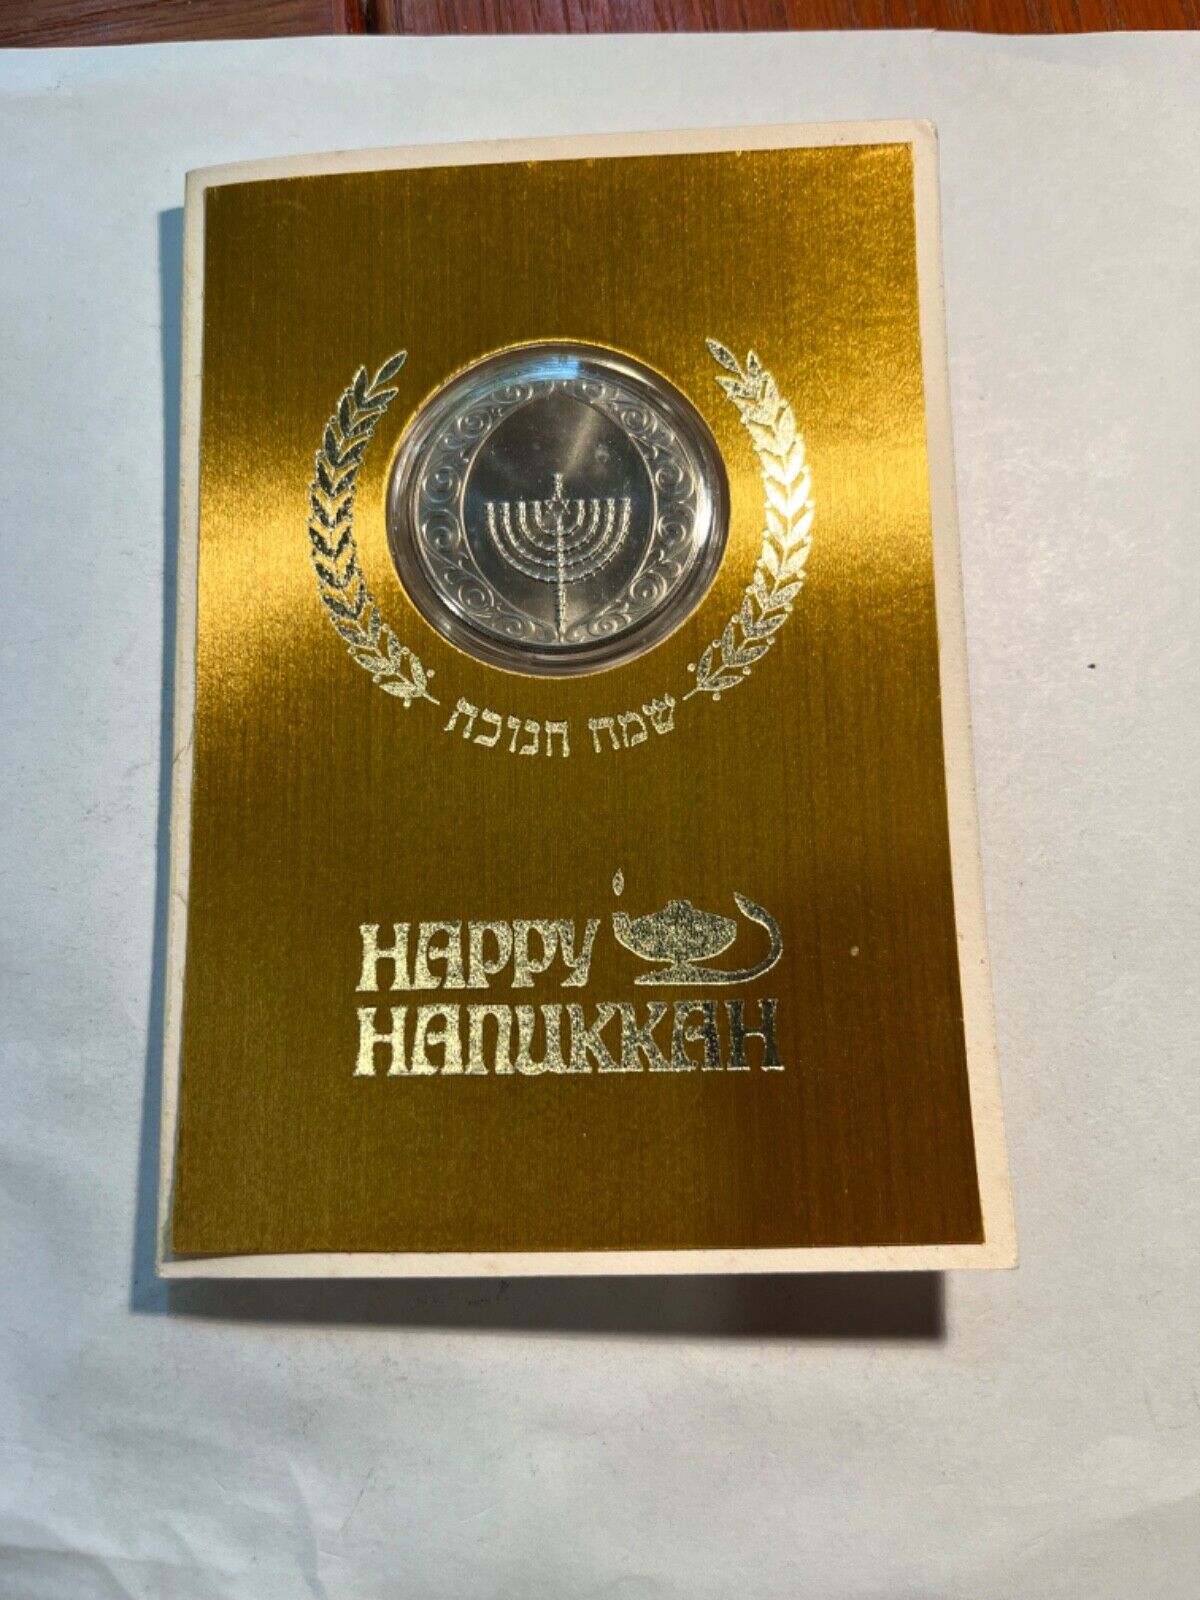 1970 Happy Hanukkah Franklin Mint Medal in greeting card UNC 